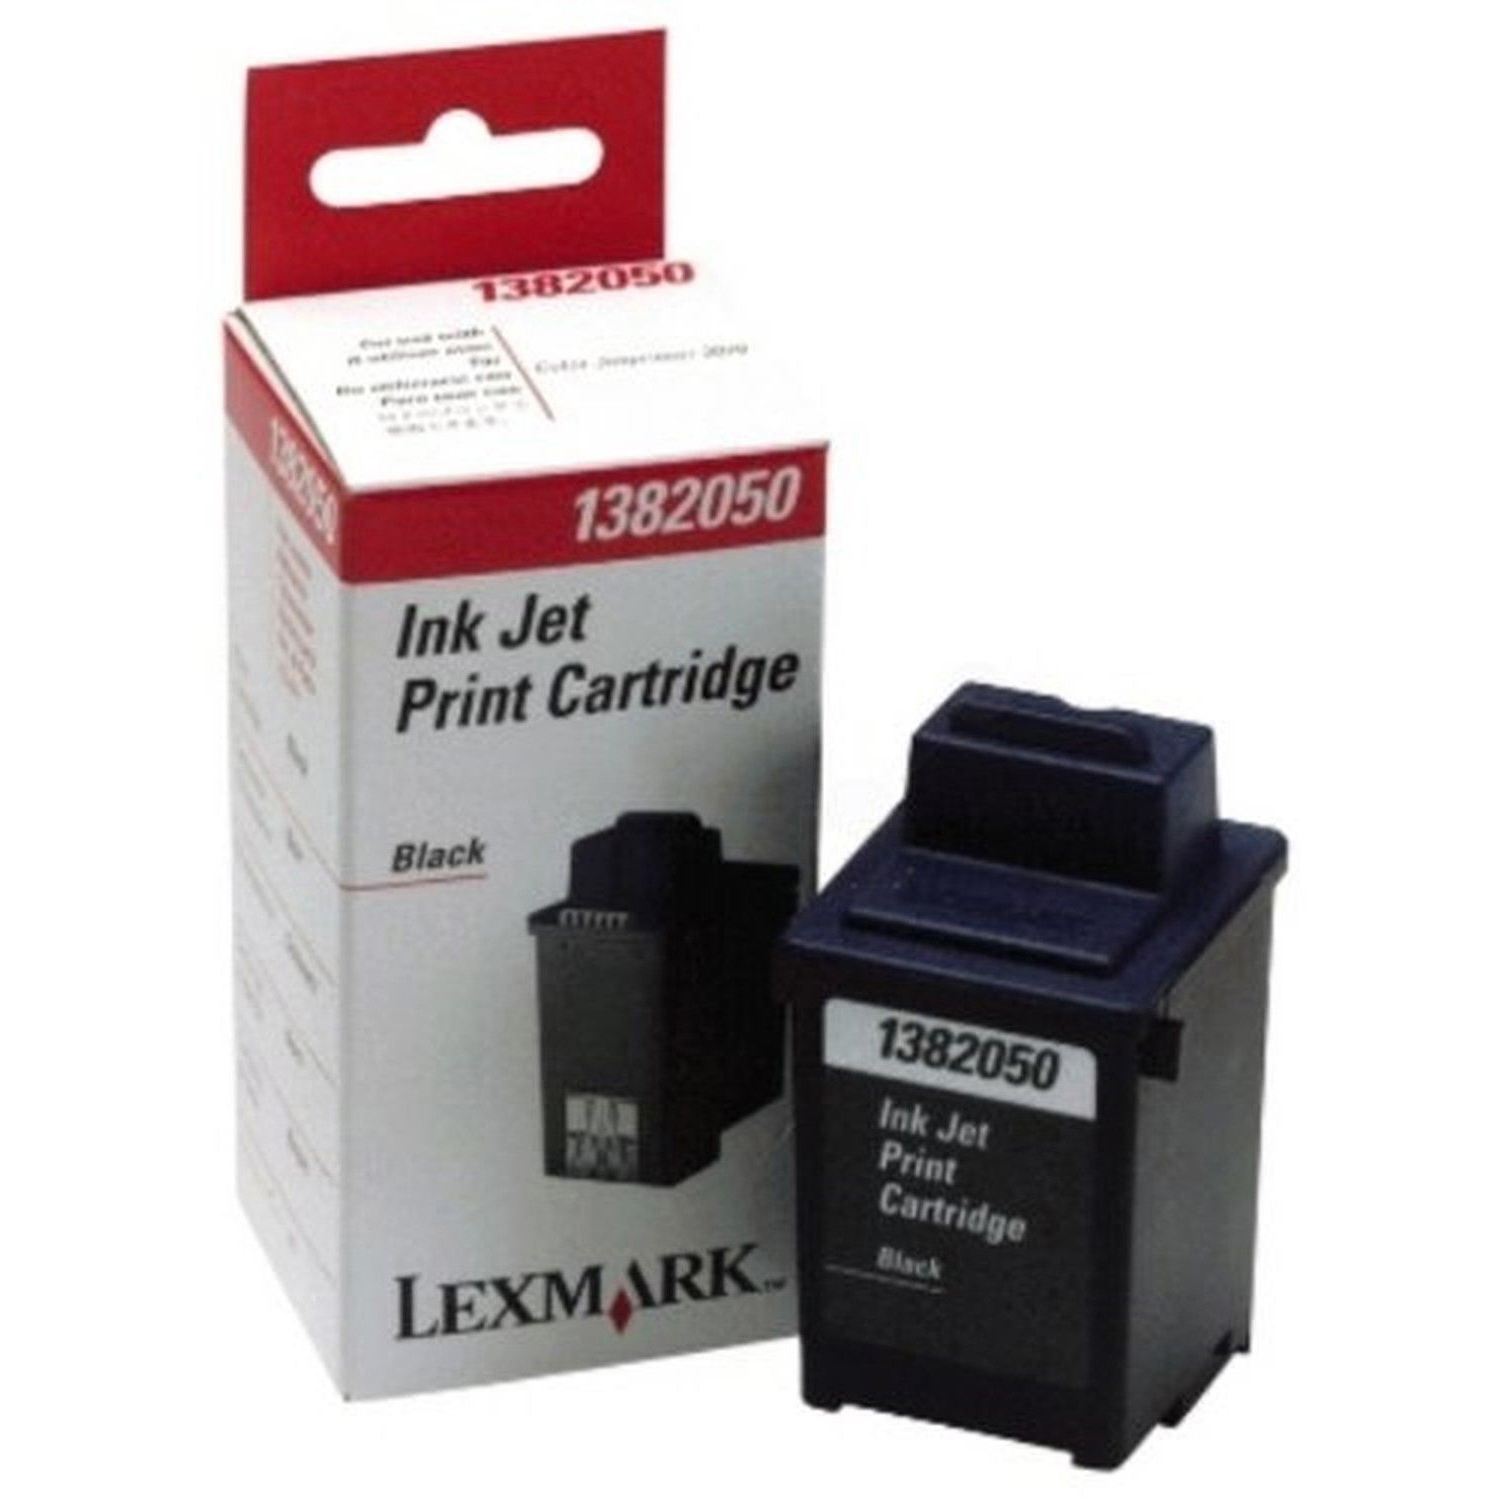 Original Lexmark 1382050 Black Ink Cartridge (1382050)